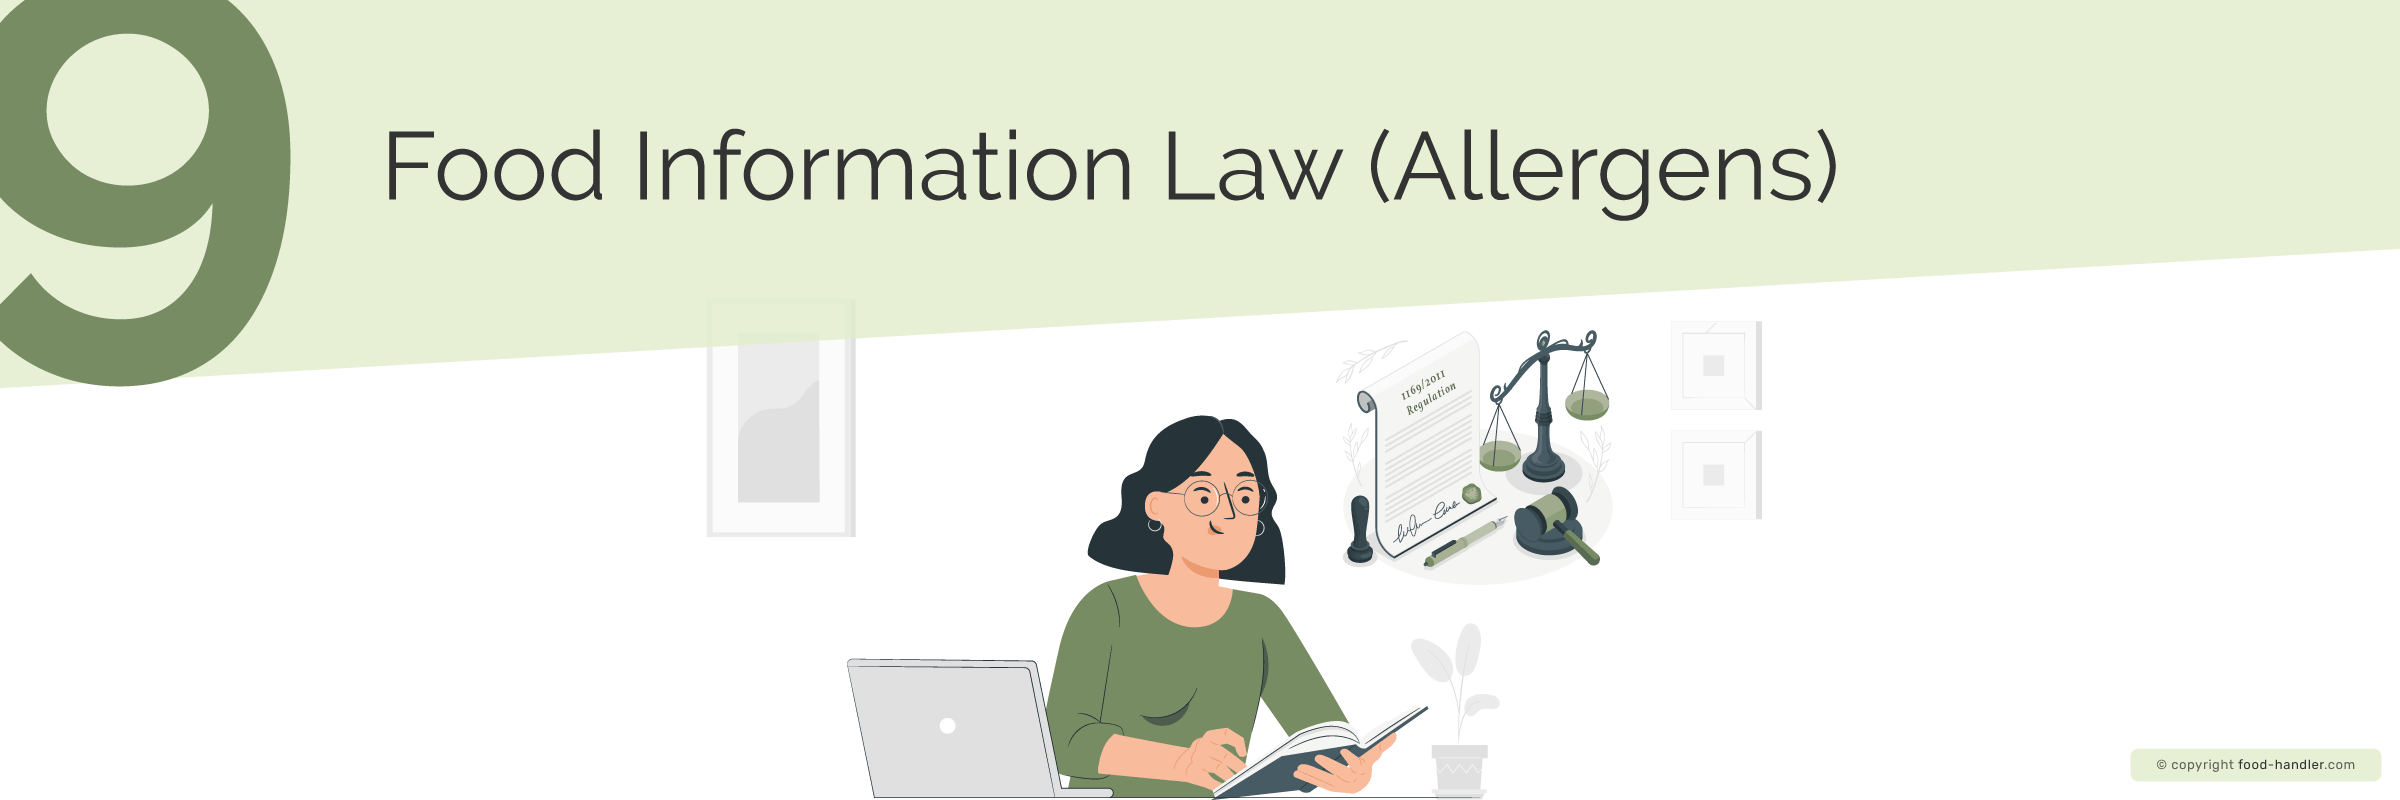 Food Information Law (Allergens)